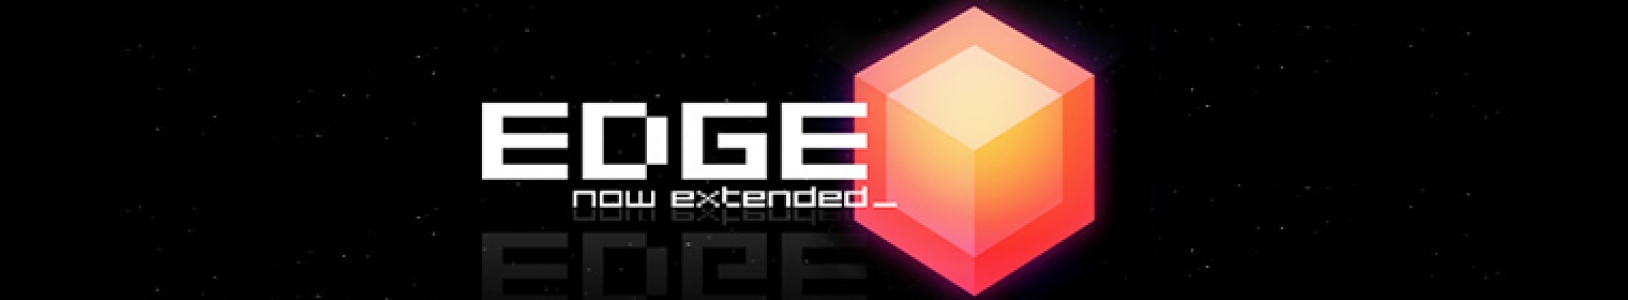 EDGE banner